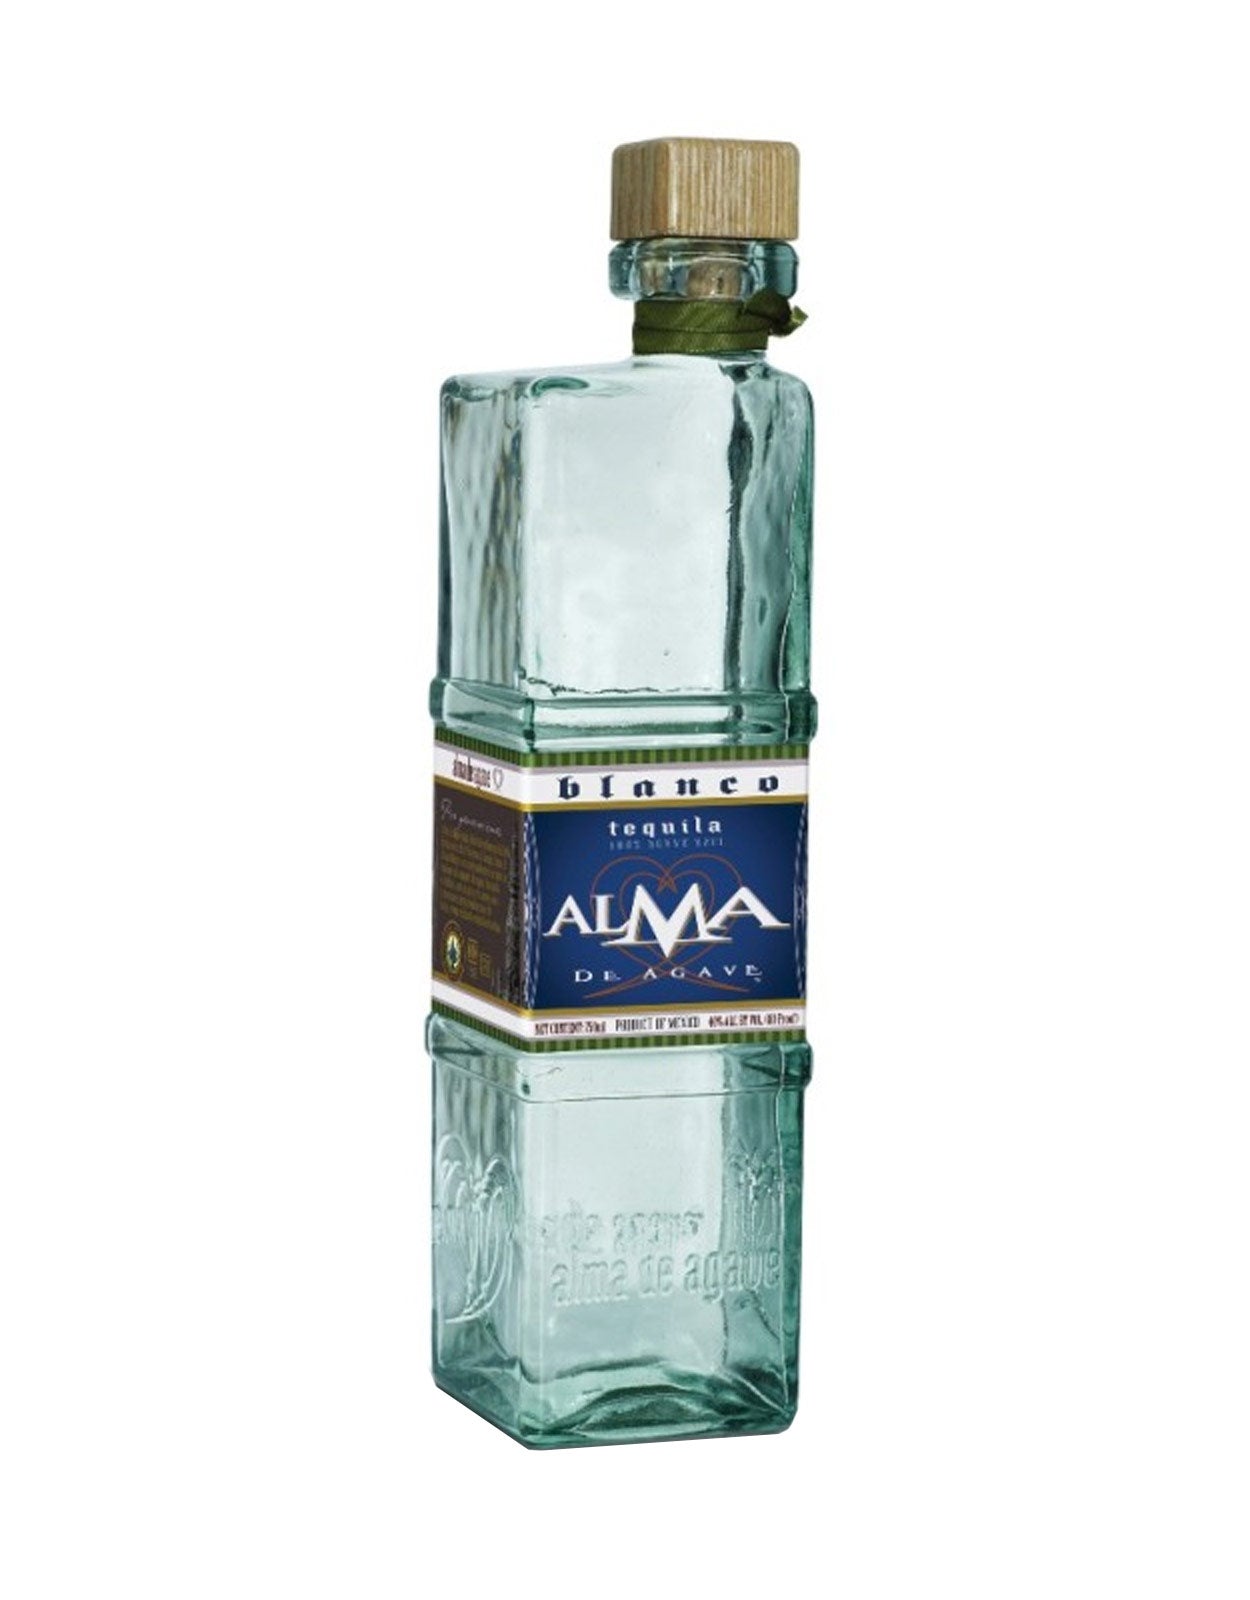 Alma de Agave Blanco Tequila